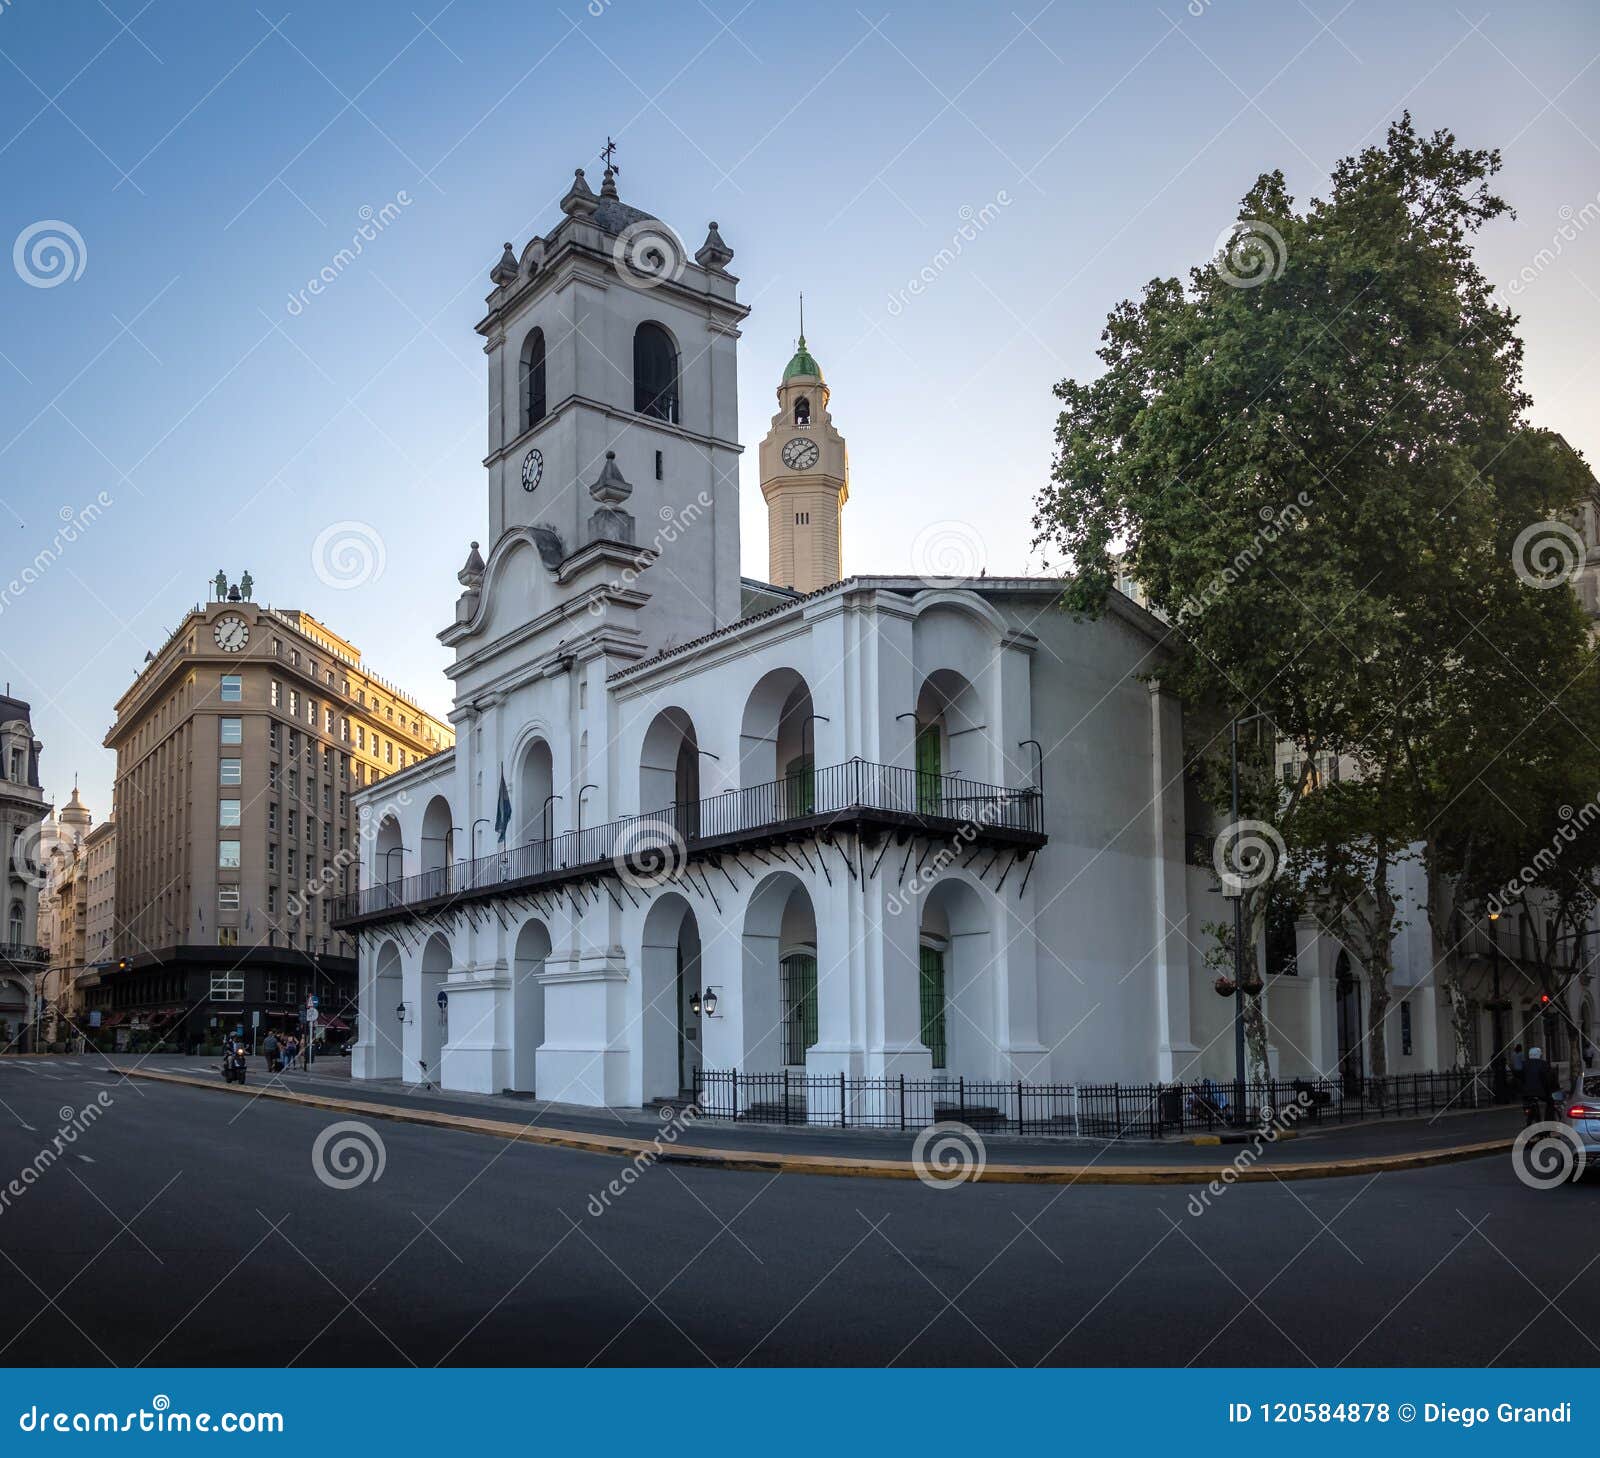 buenos aires cabildo building, colonial town council - buenos aires, argentina